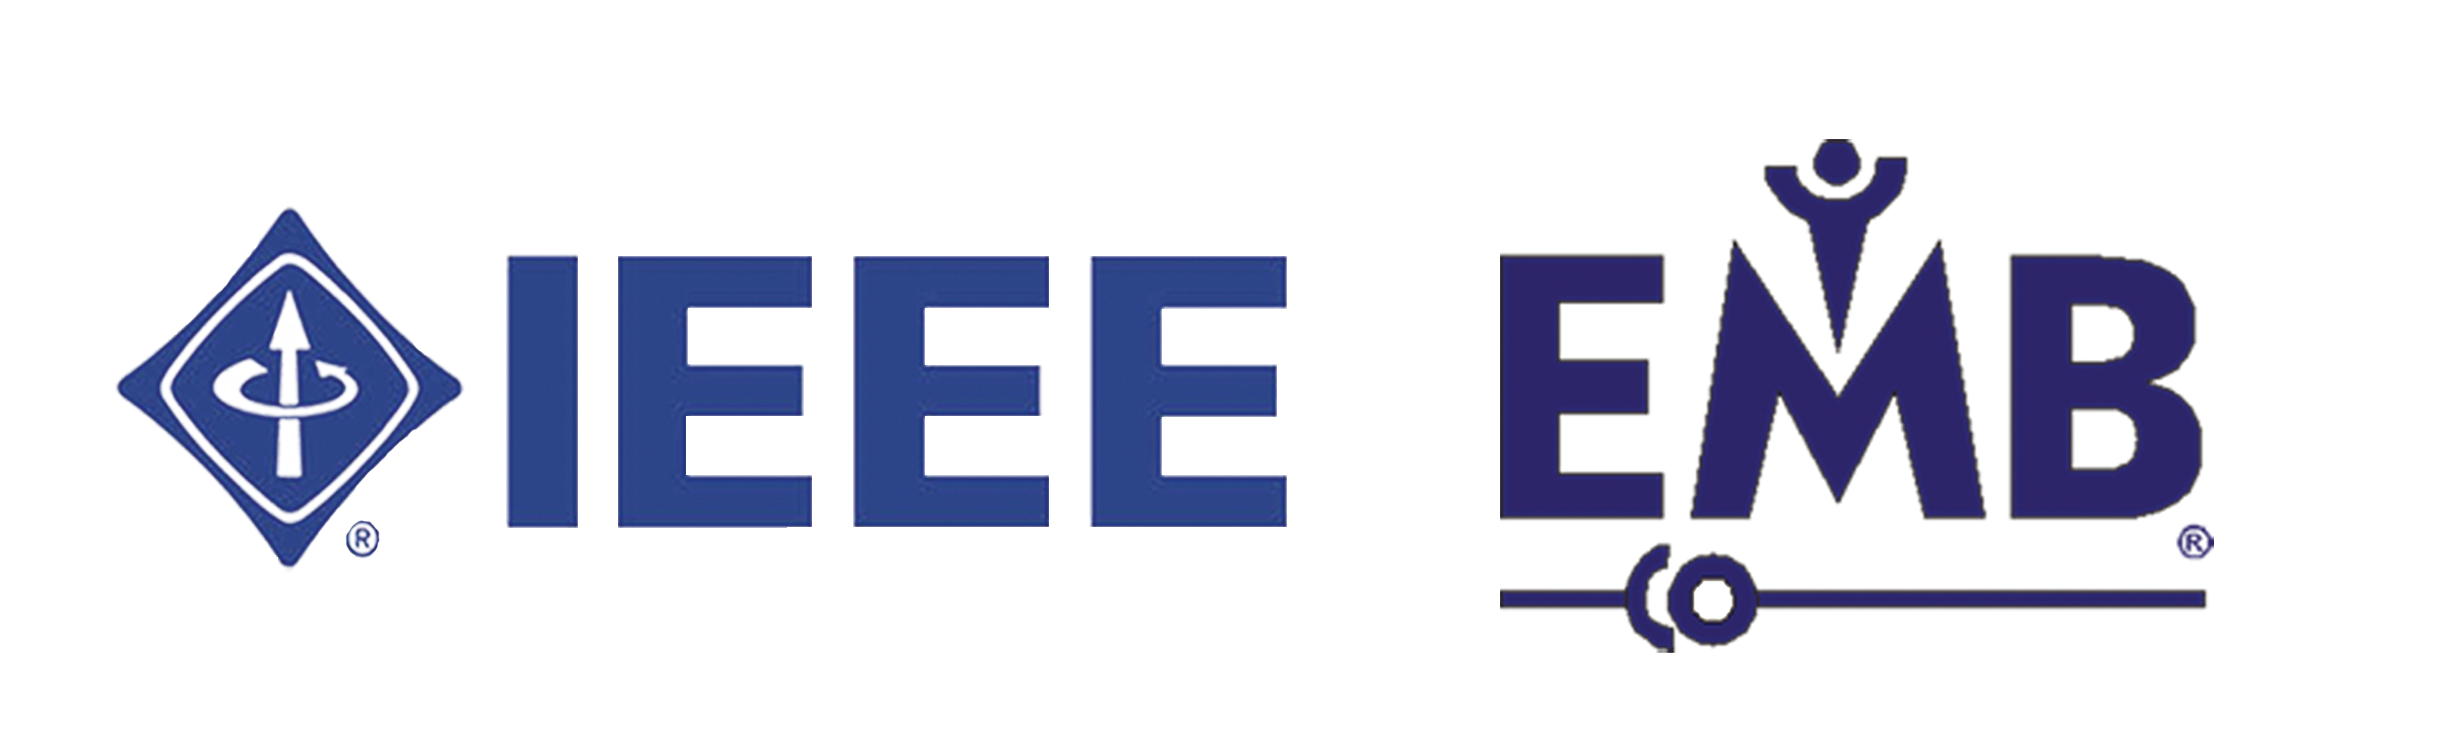 IEEE-EMBS